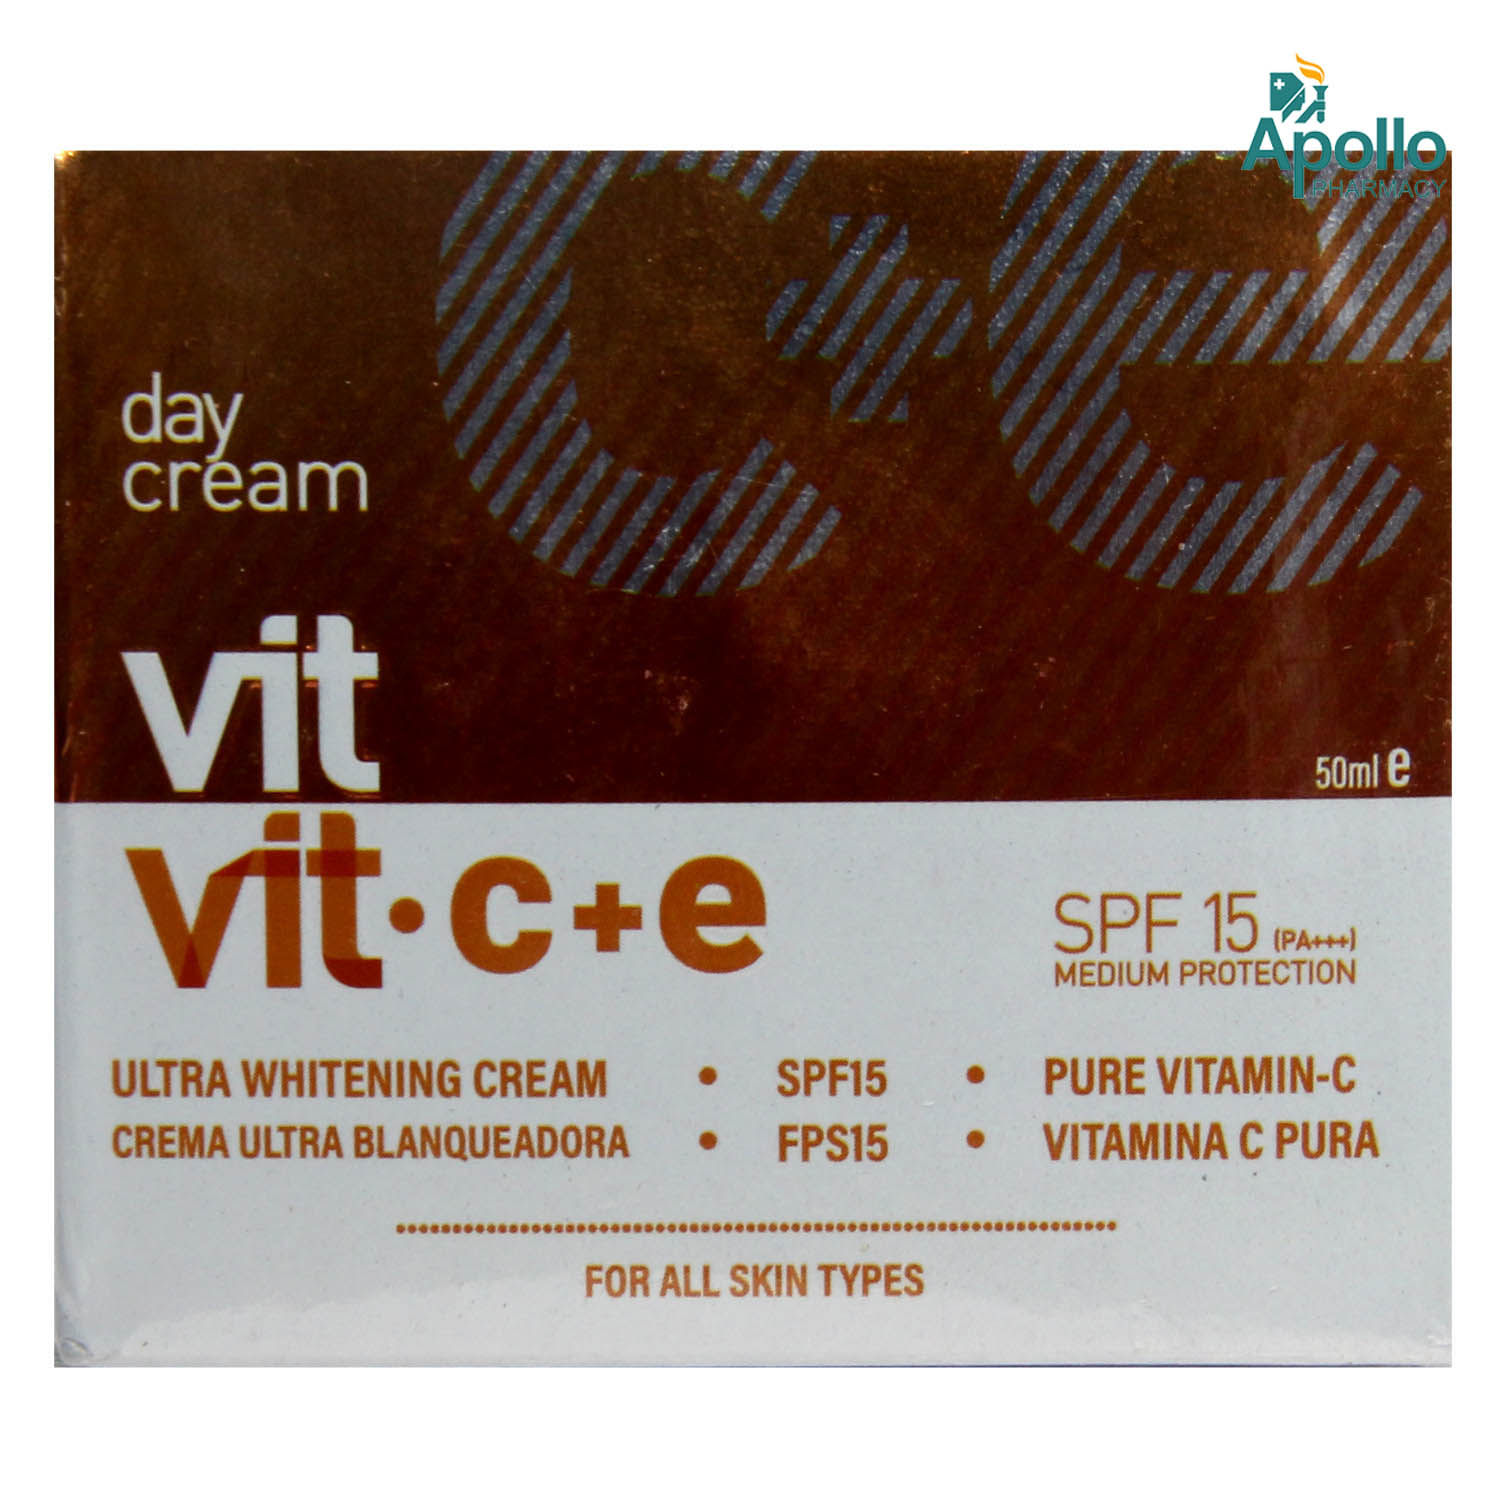 eerlijk spuiten Verspreiding VIT VIT.C + E SPF 15 Day Cream 50 ml Price, Uses, Side Effects, Composition  - Apollo Pharmacy